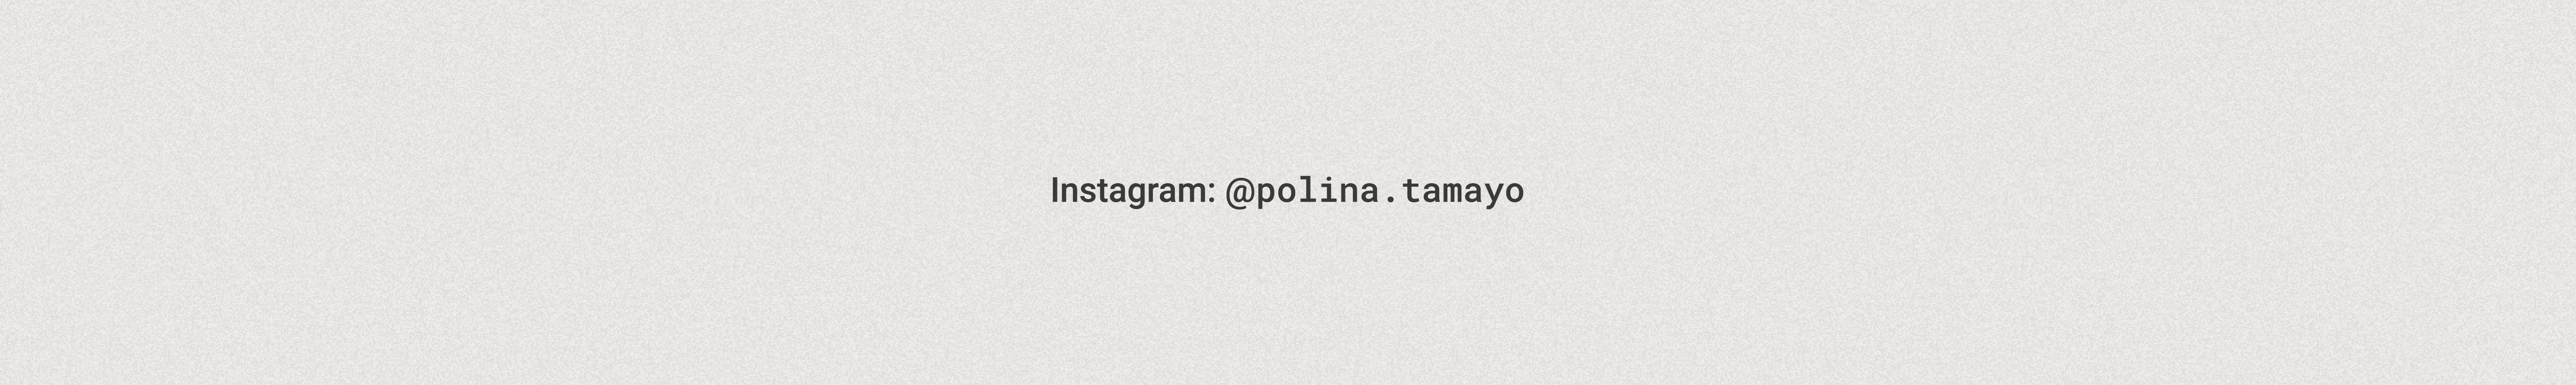 Polina Tamayo's profile banner